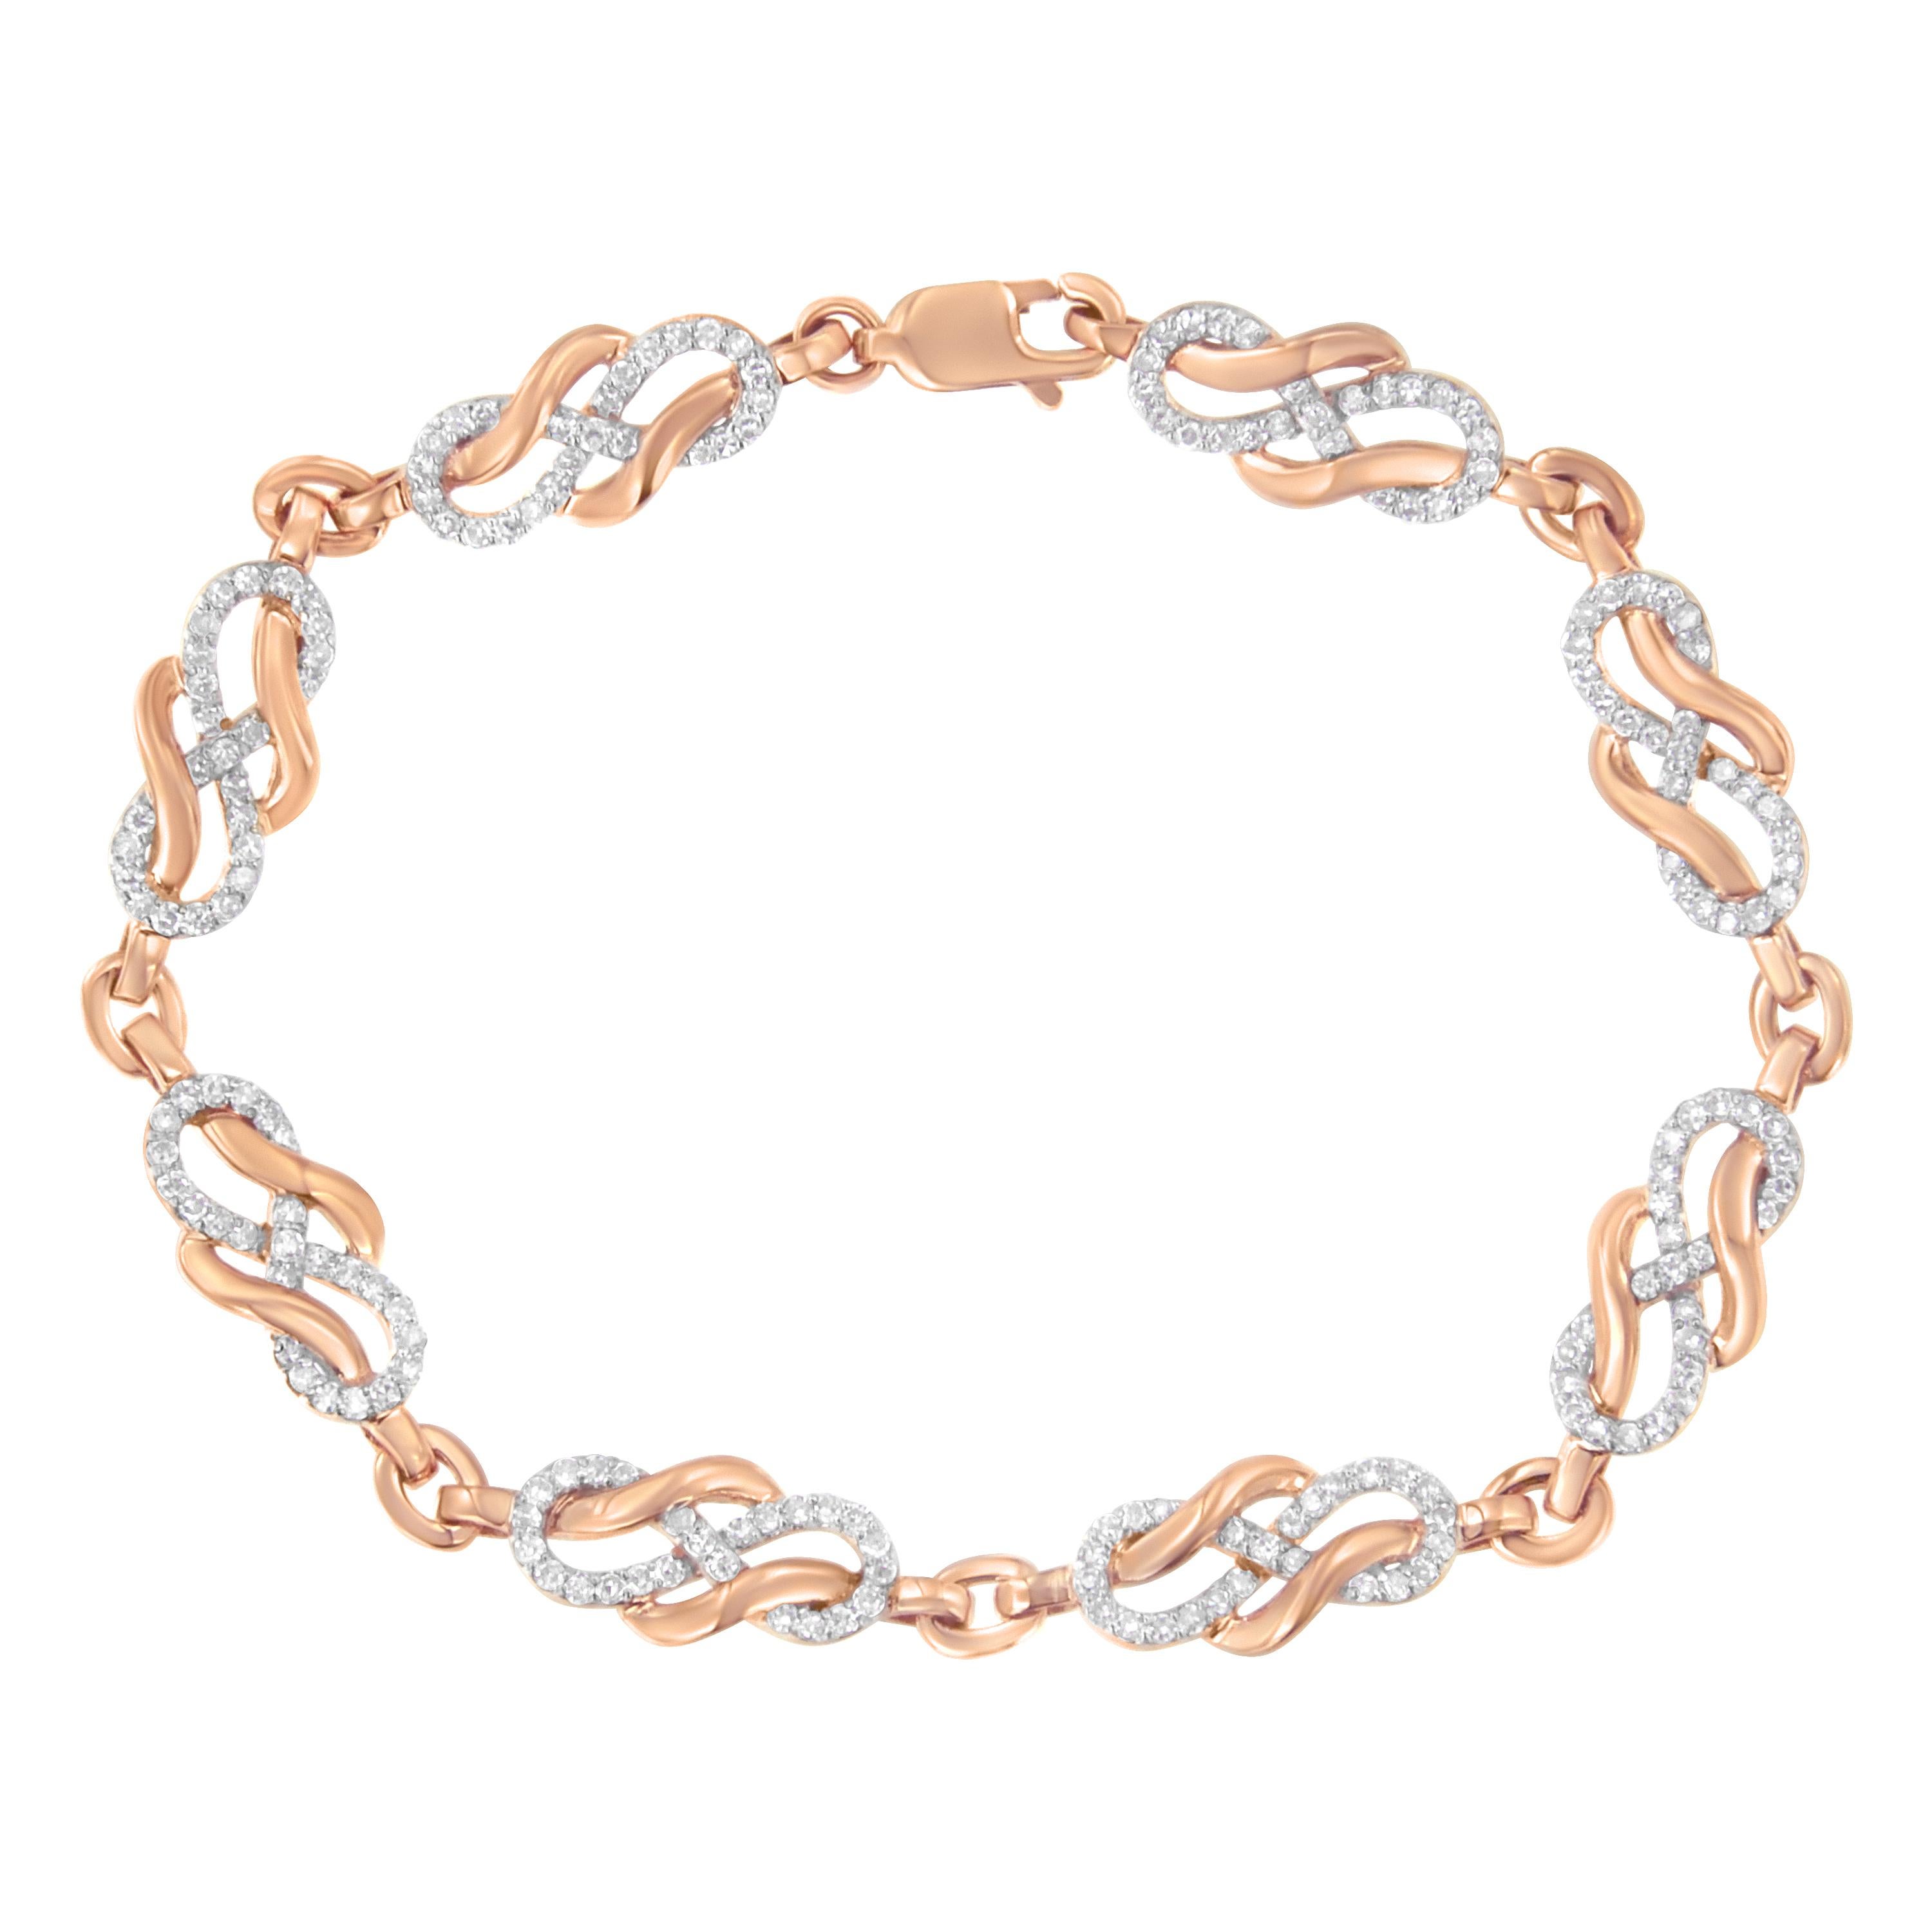 10K Rose Gold 1.0 Cttw Diamond Infinity Loop and Swirl Link Bracelet